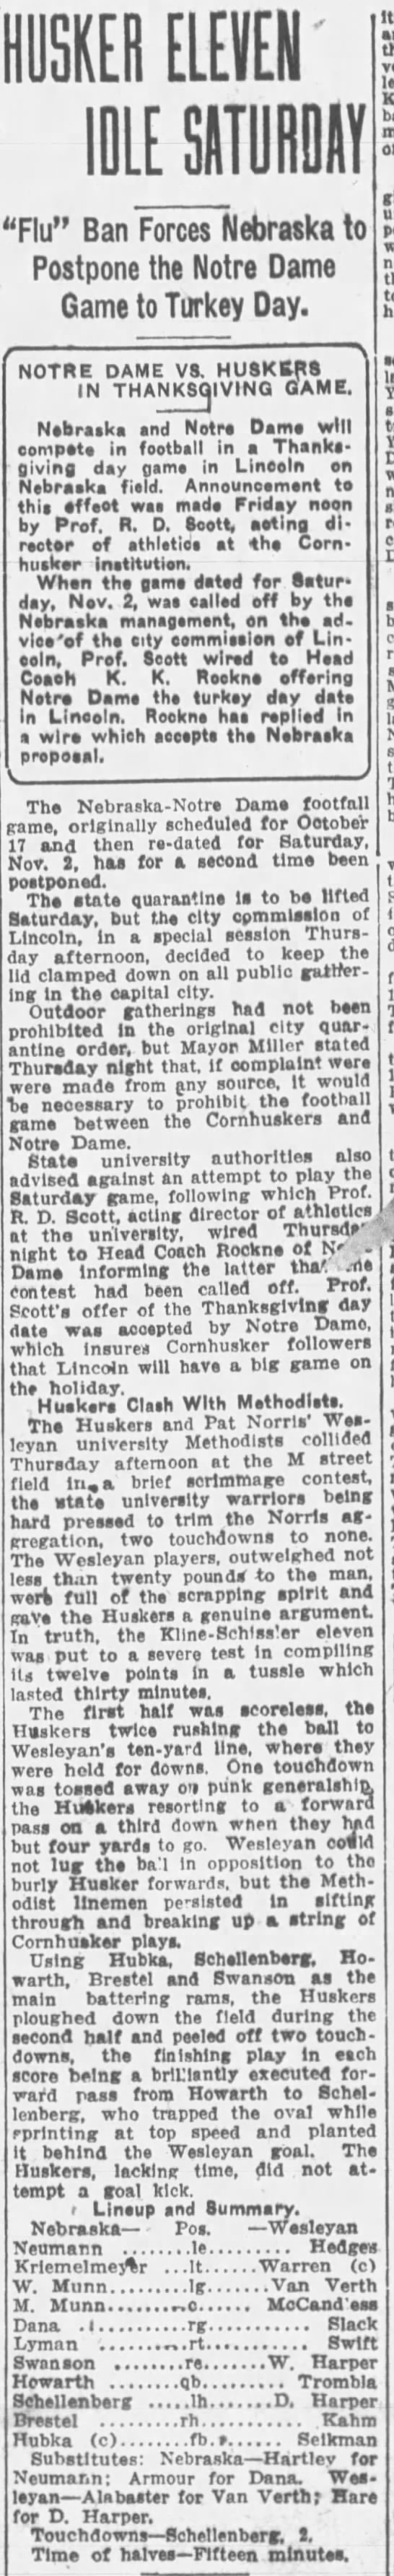 1918 Nebraska-Notre Dame football second postponement - 